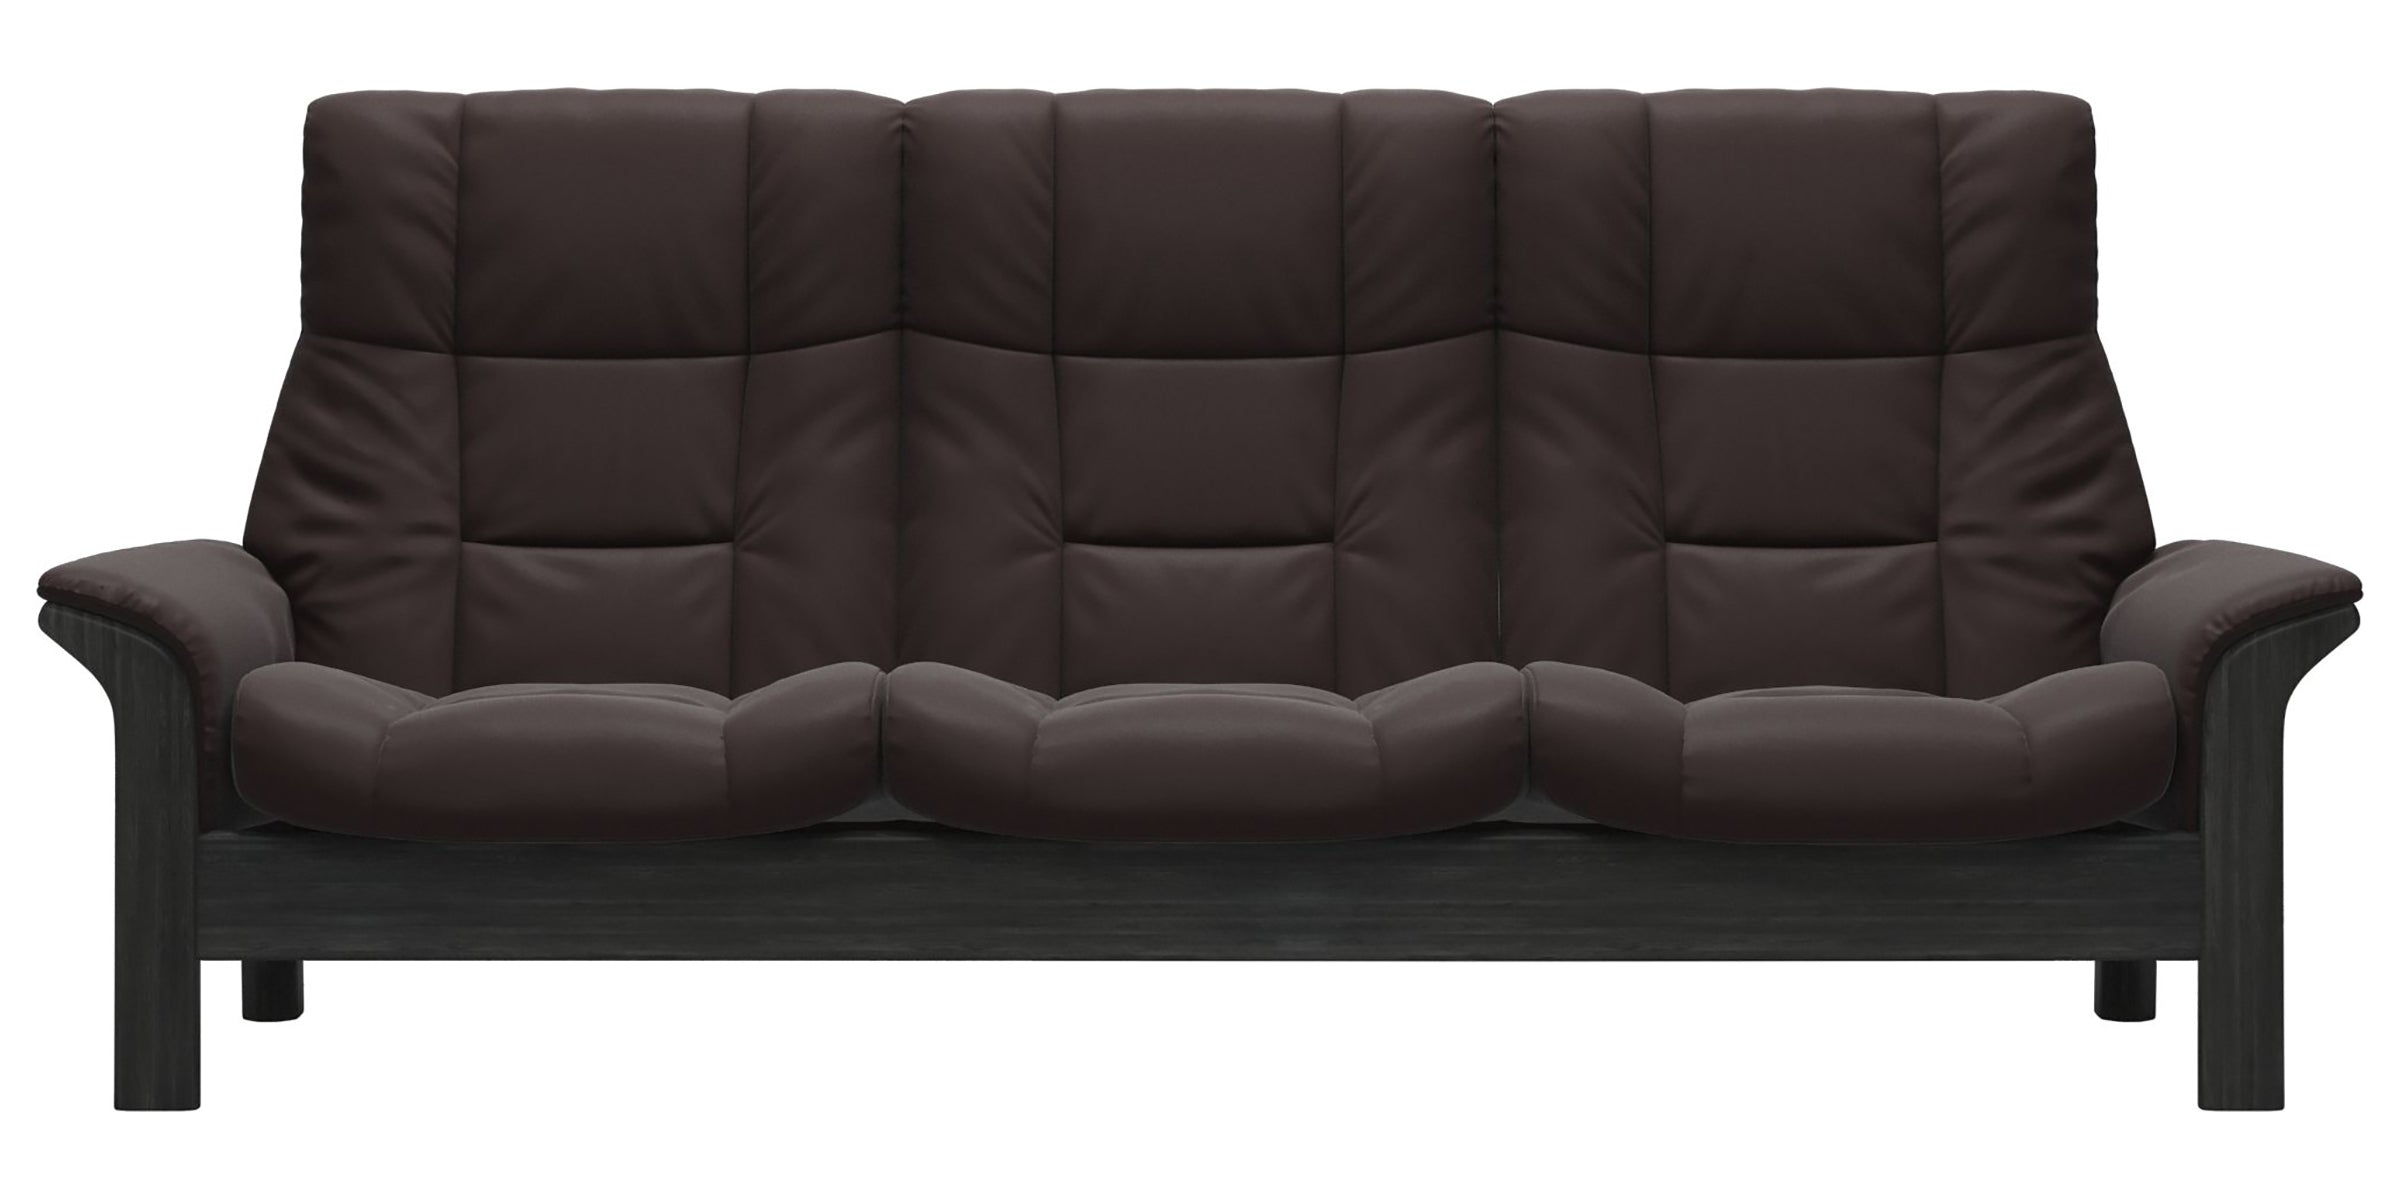 Paloma Leather Chocolate and Grey Base | Stressless Buckingham 3-Seater High Back Sofa | Valley Ridge Furniture